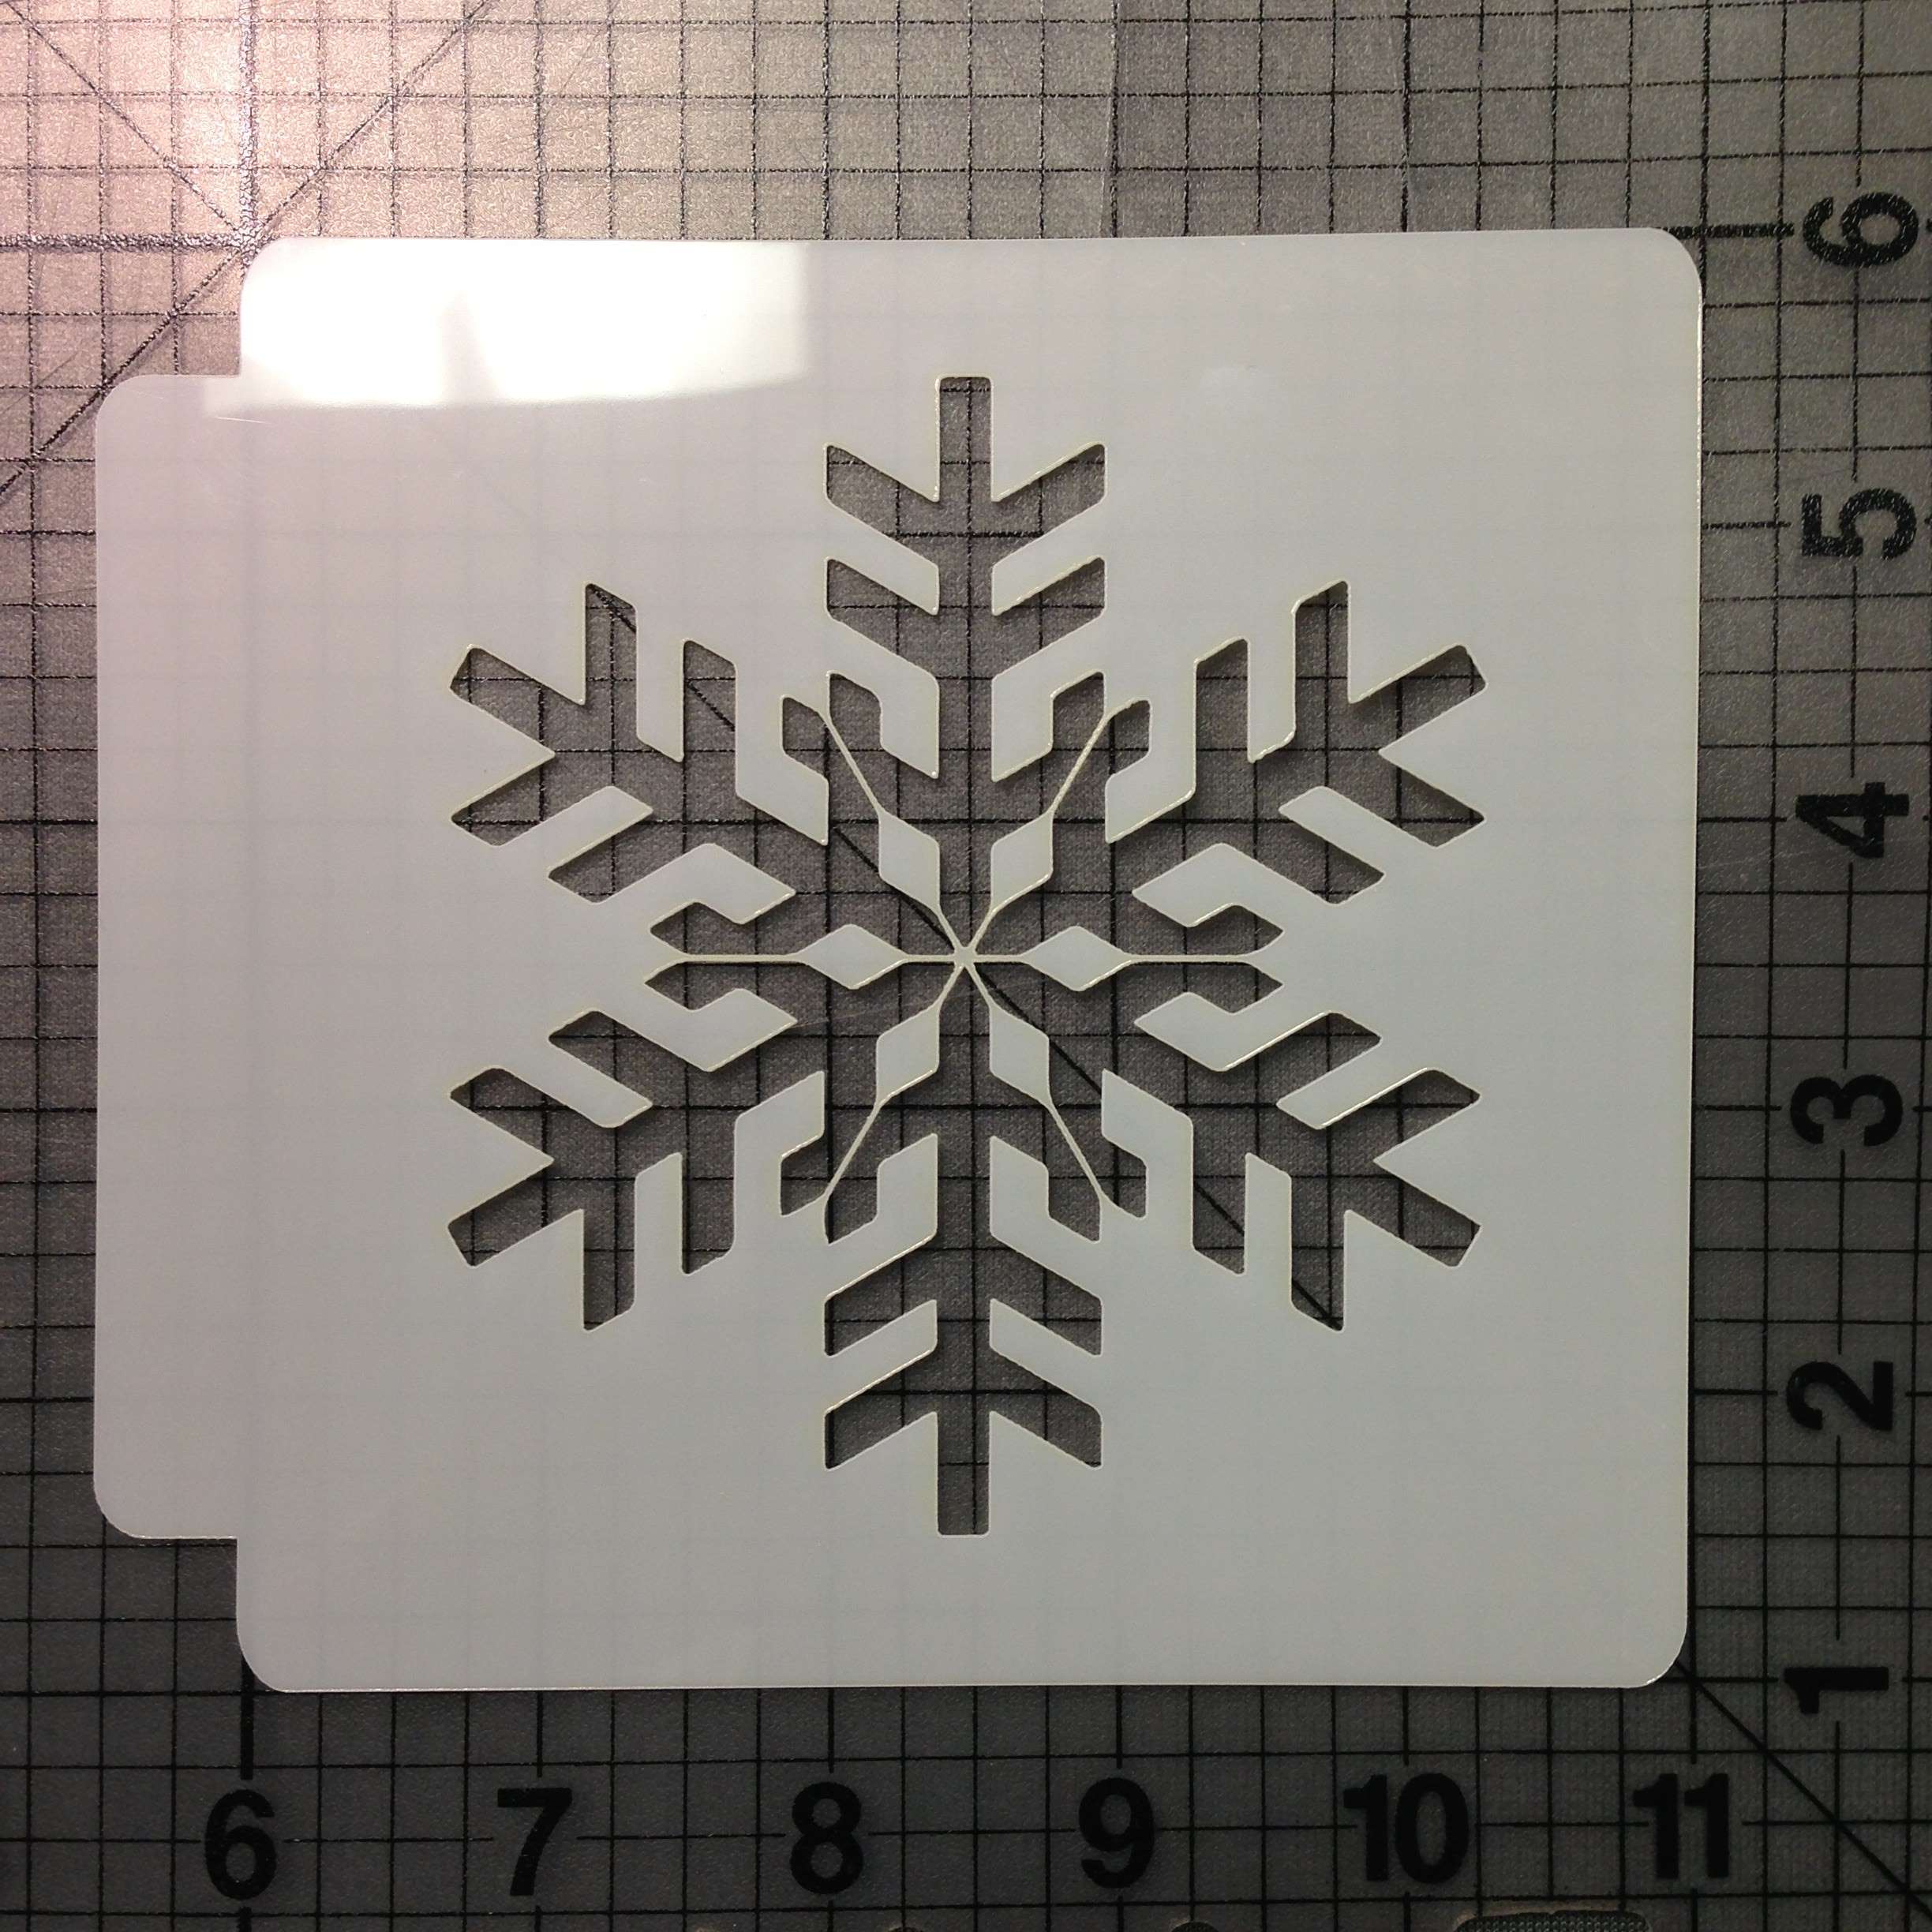 Snowflake Stencil | Stencilmonkey